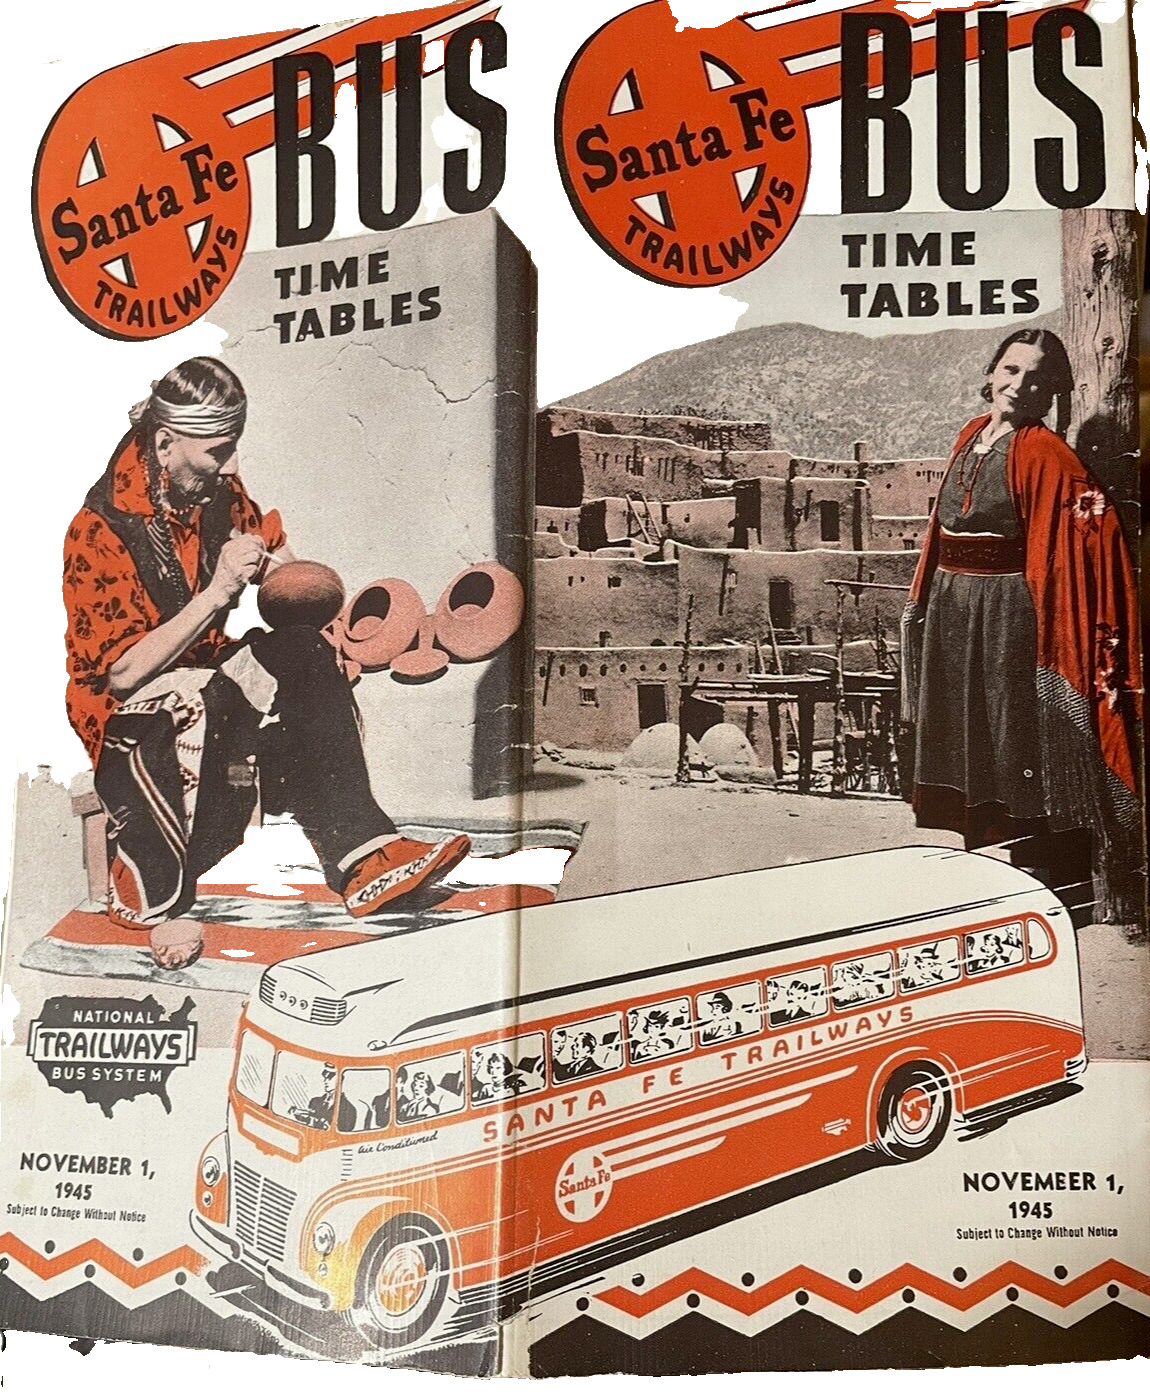 Santa Fe Trailways Bus Time Table Book War Victory Bond Advert Vintage WWII 1945